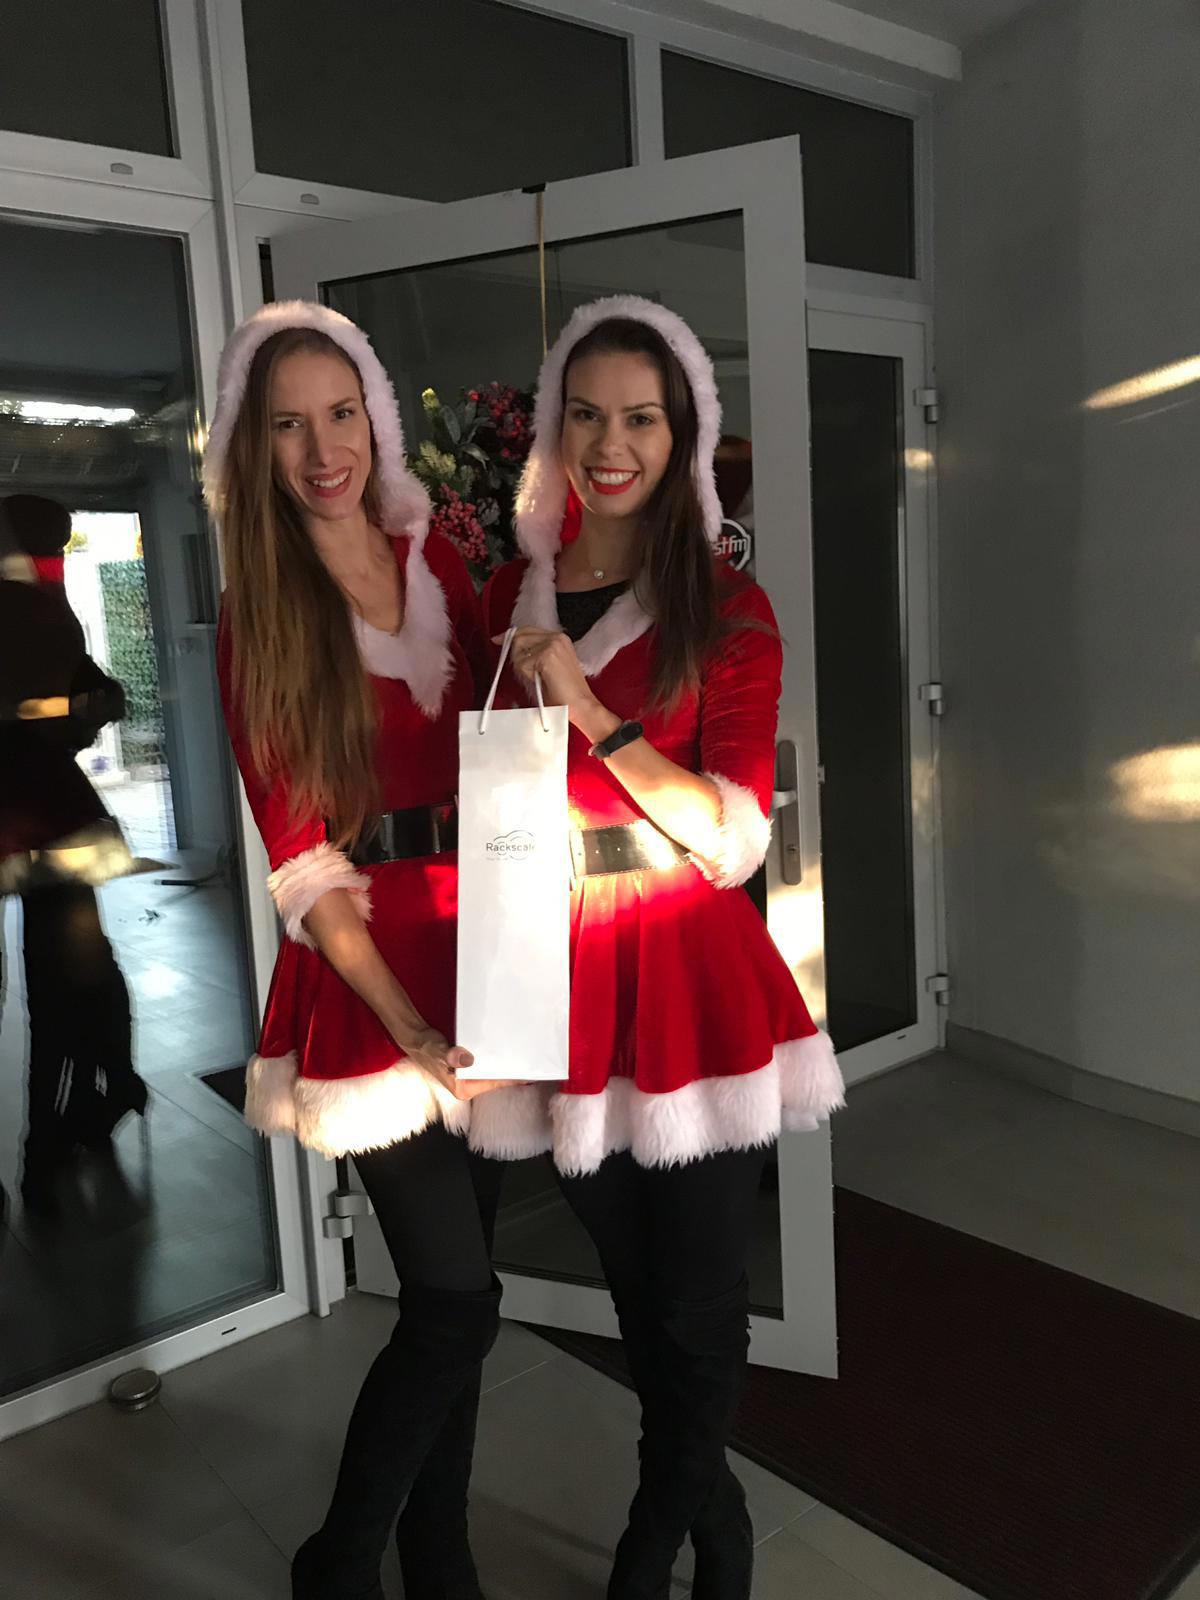 Our marketing team Lenka&Monika wish you Merry Christmas!